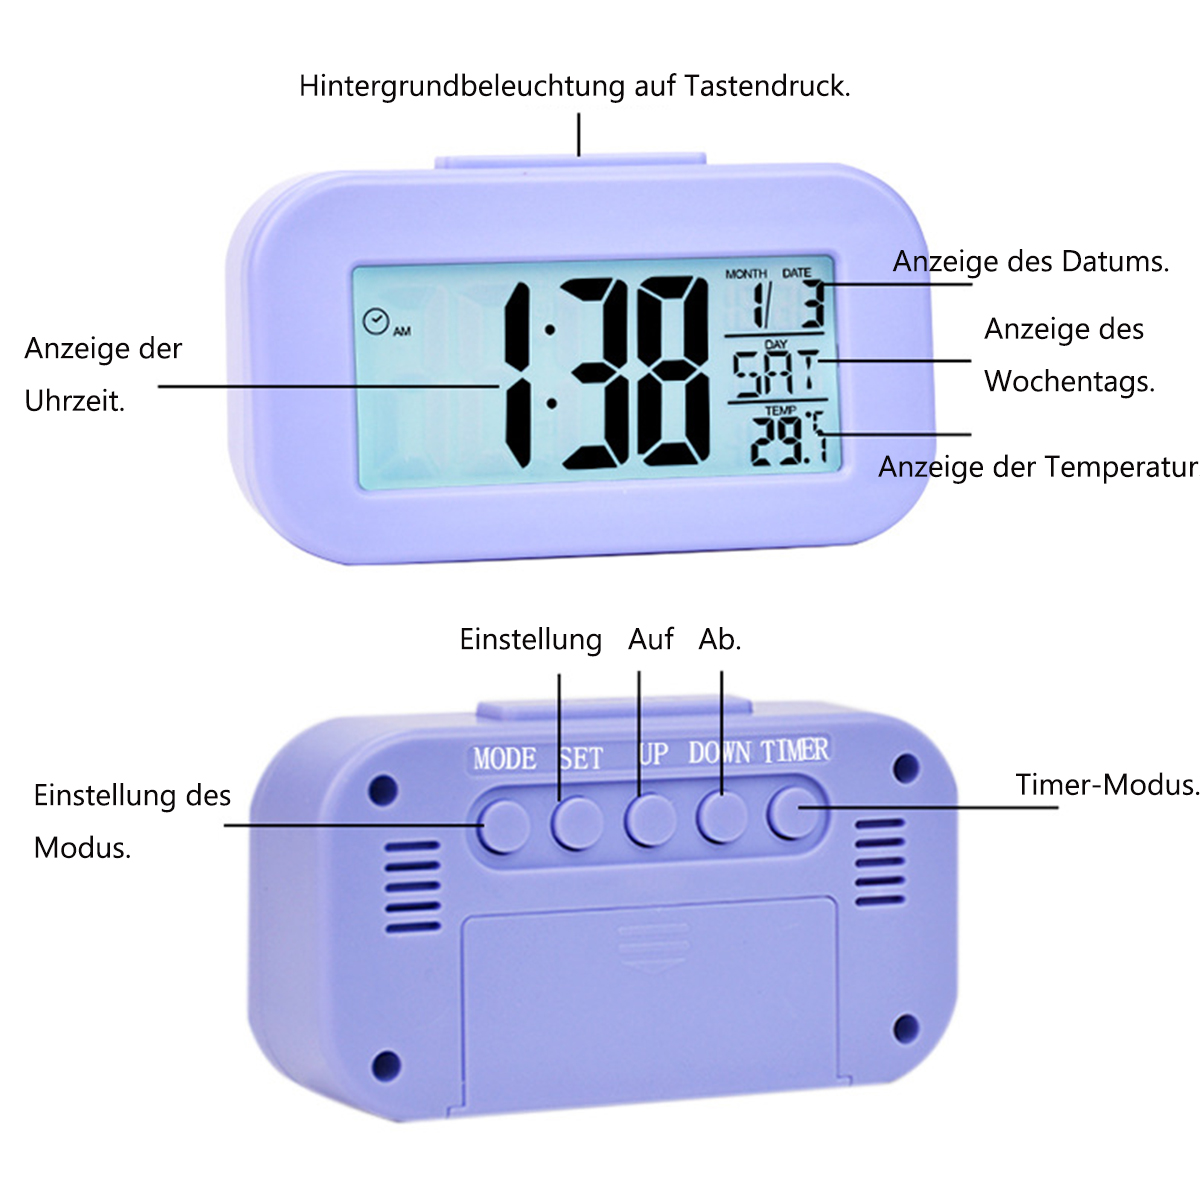 LED-Display BRIGHTAKE Alarm Wecker Alarm Elektronische Snooze-Funktion Uhr